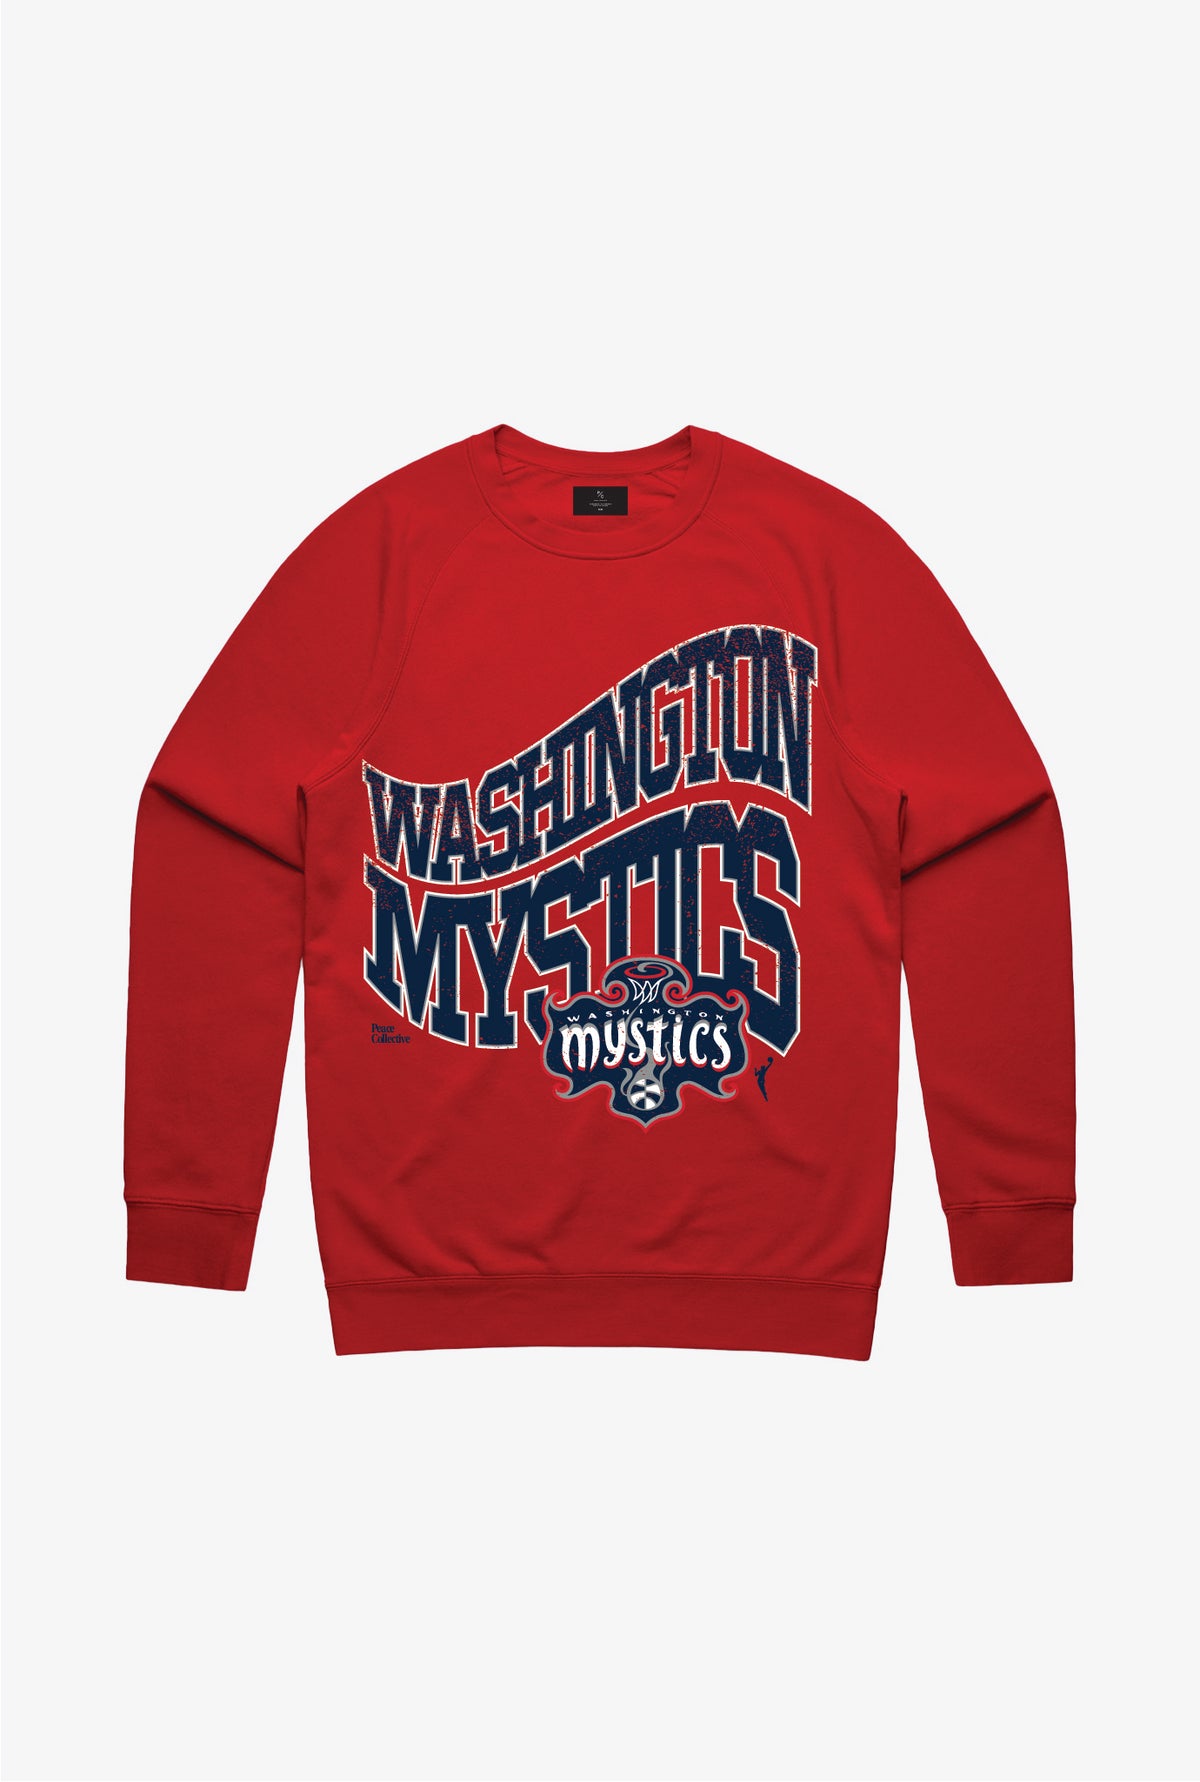 Washington Mystics Crewneck - Red